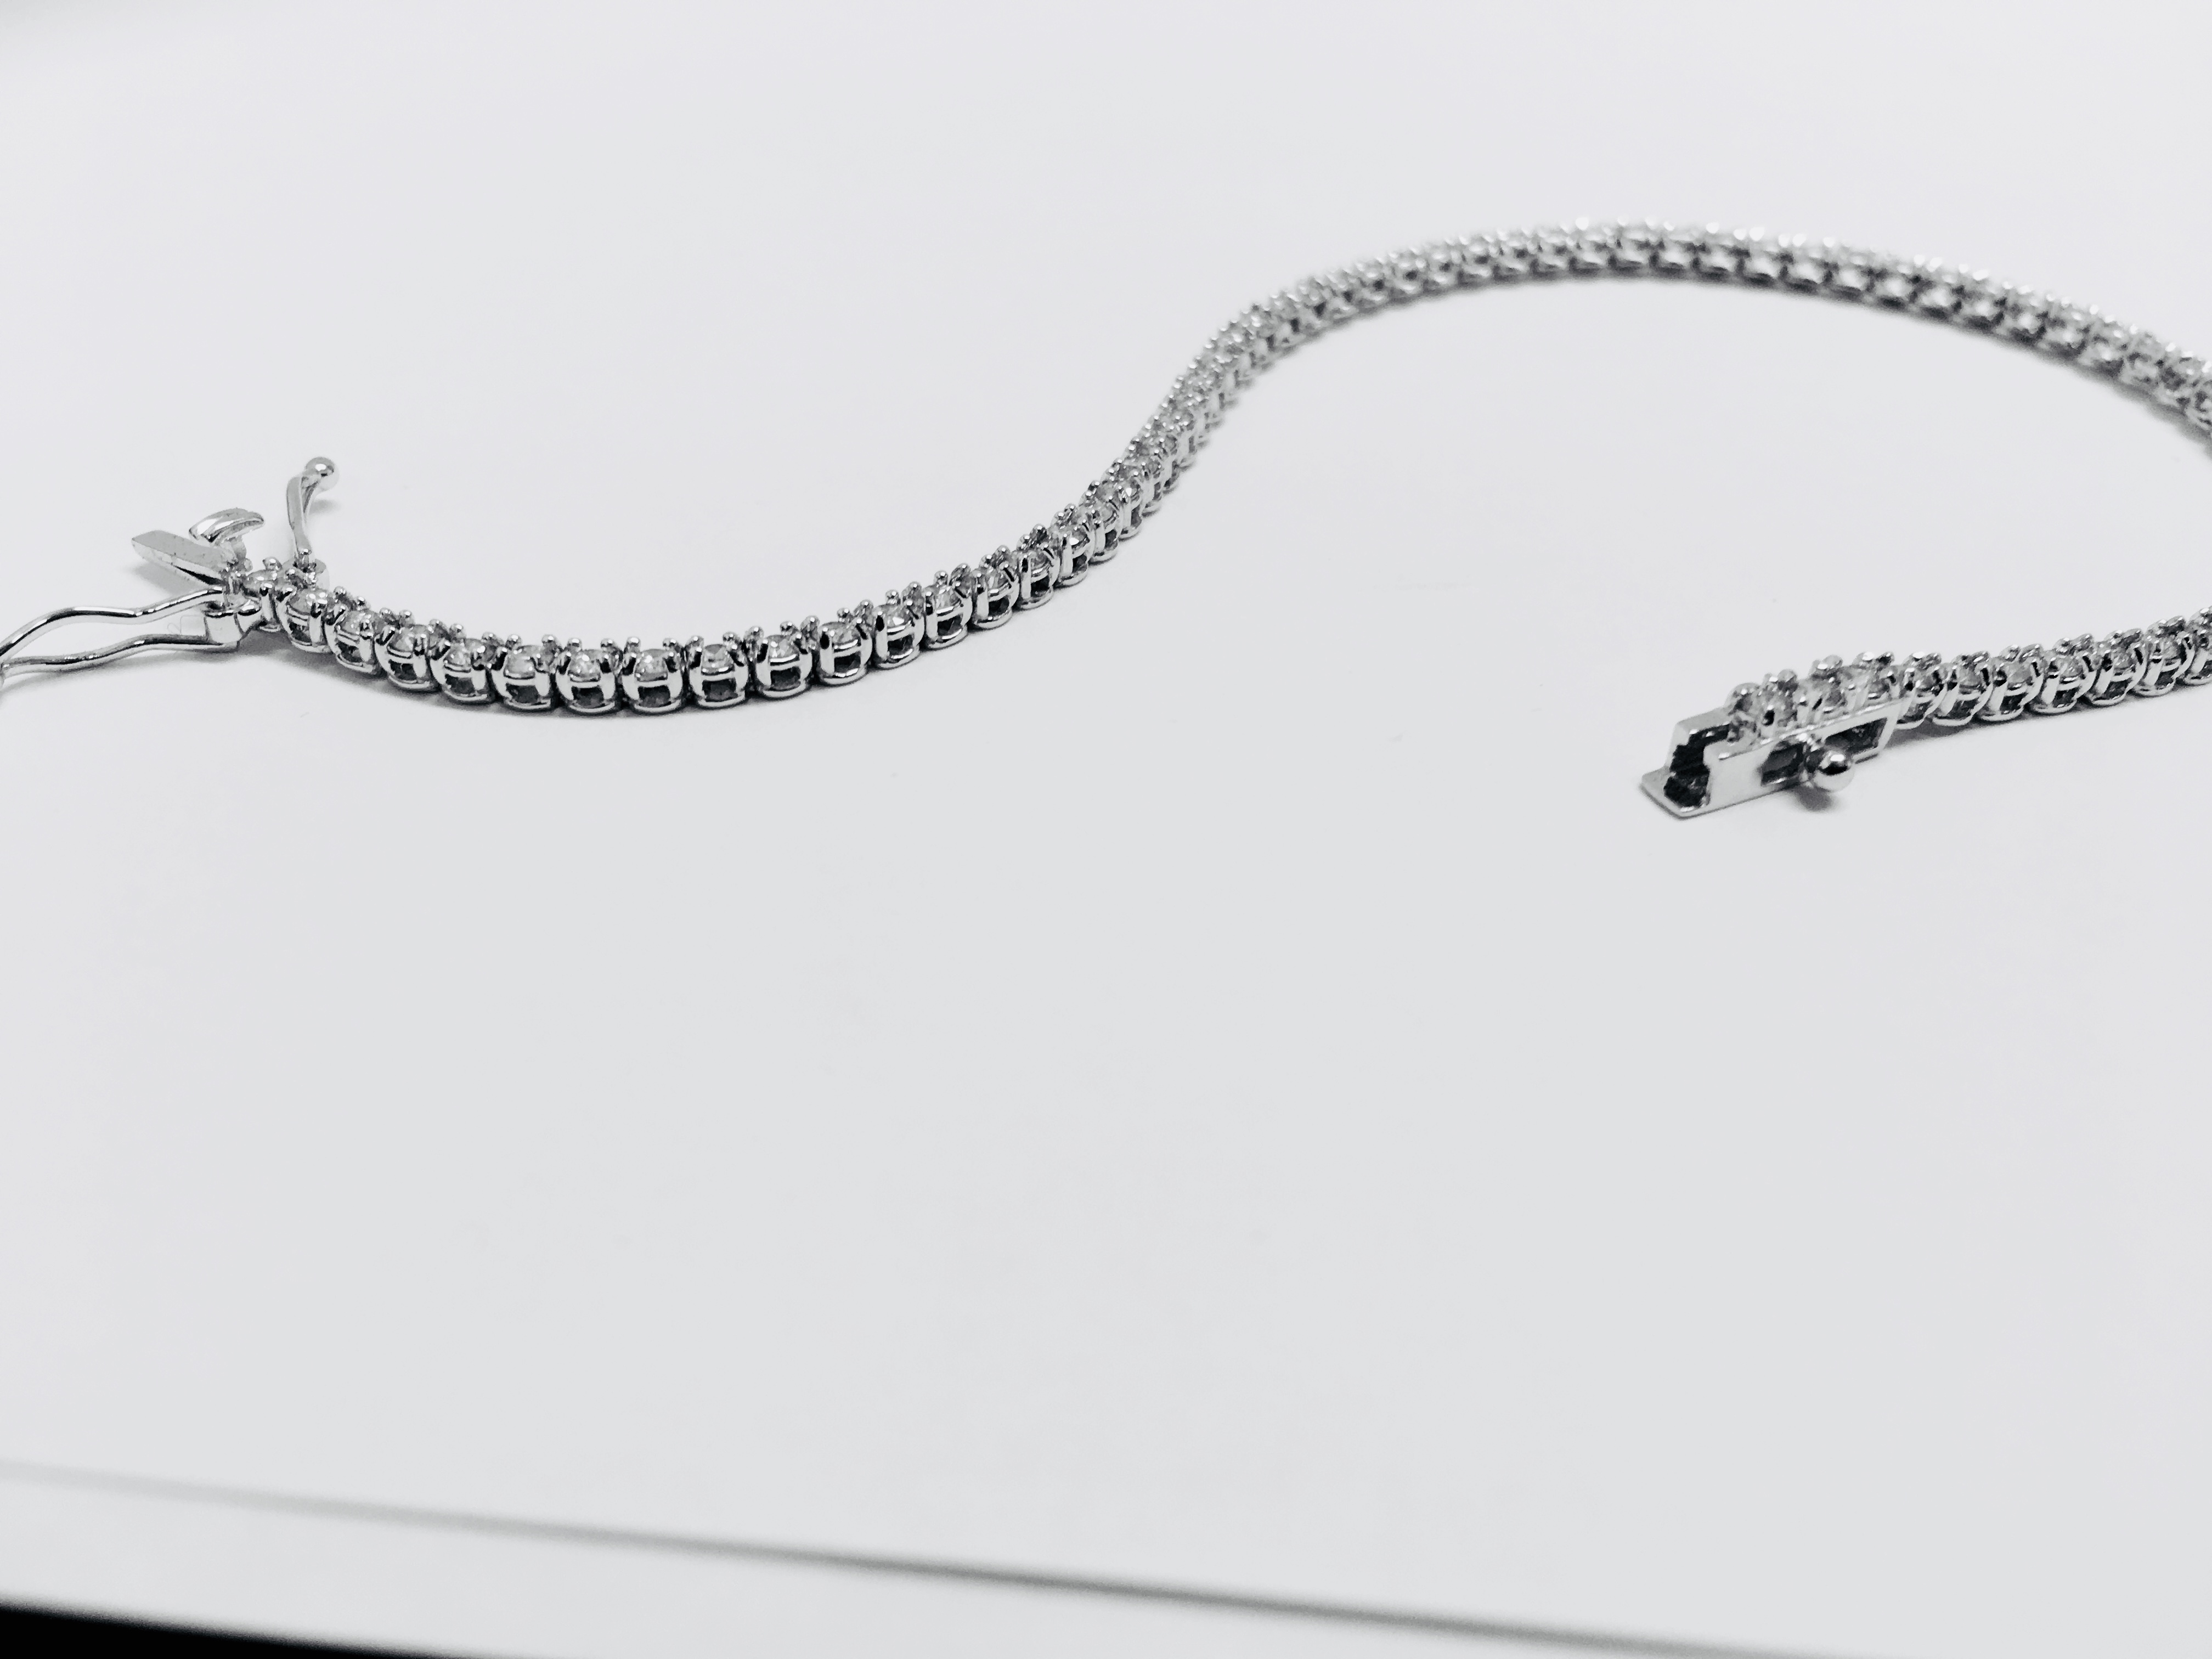 2.10ct diamond tennis bracelet with 70 brilliant cut diamonds - Image 4 of 4